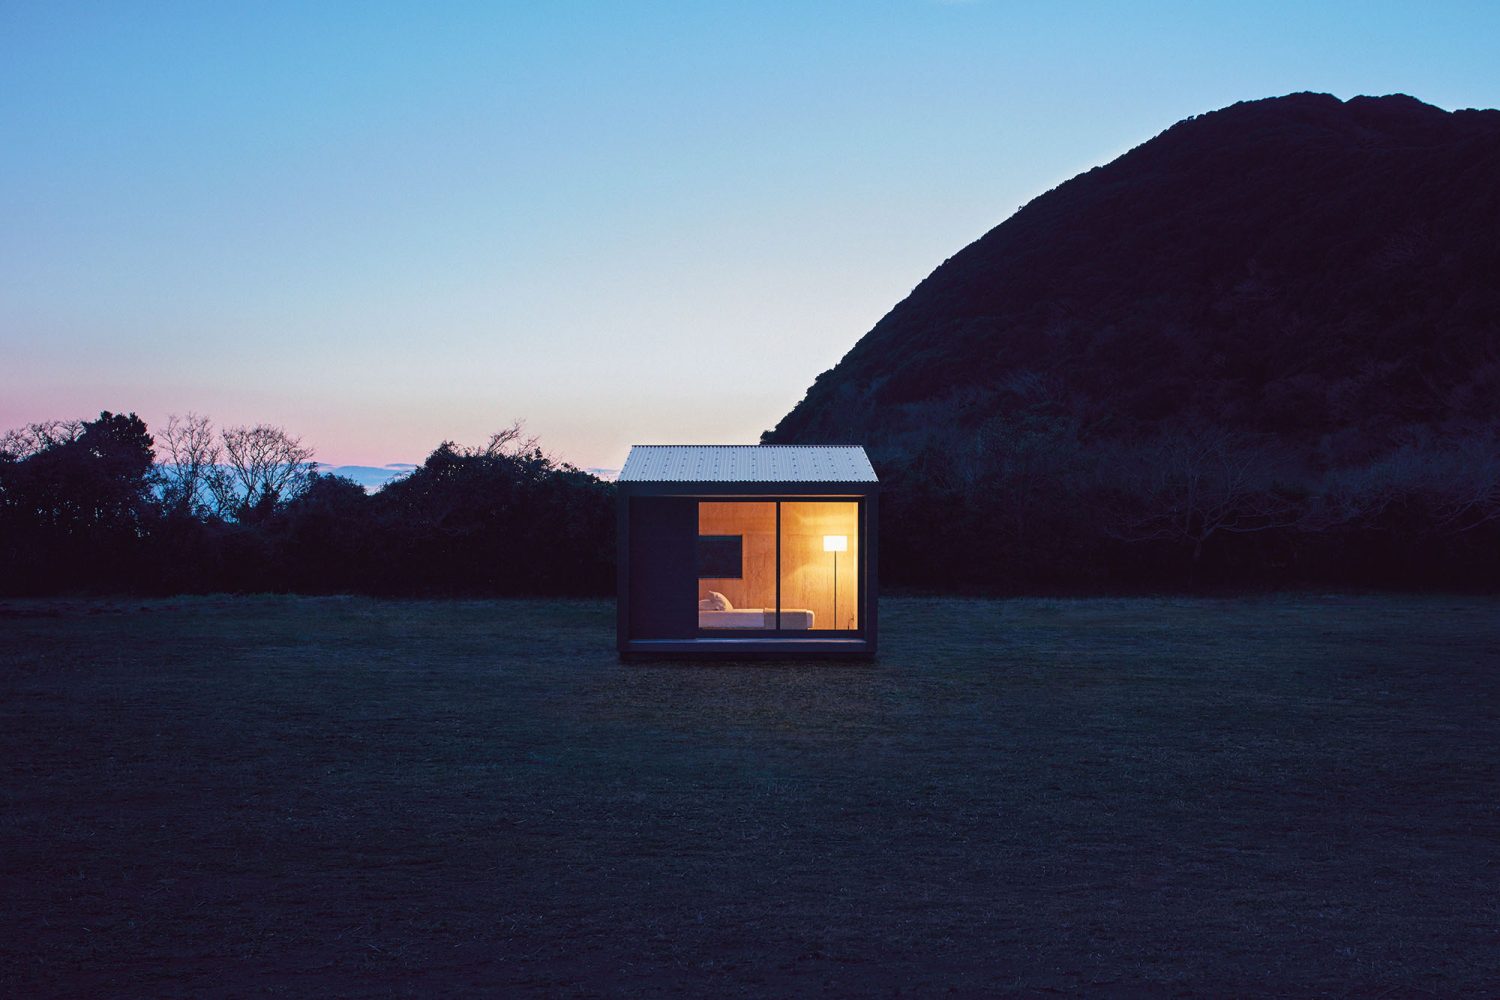 Muji Hut | Tiny Prefabricated Home